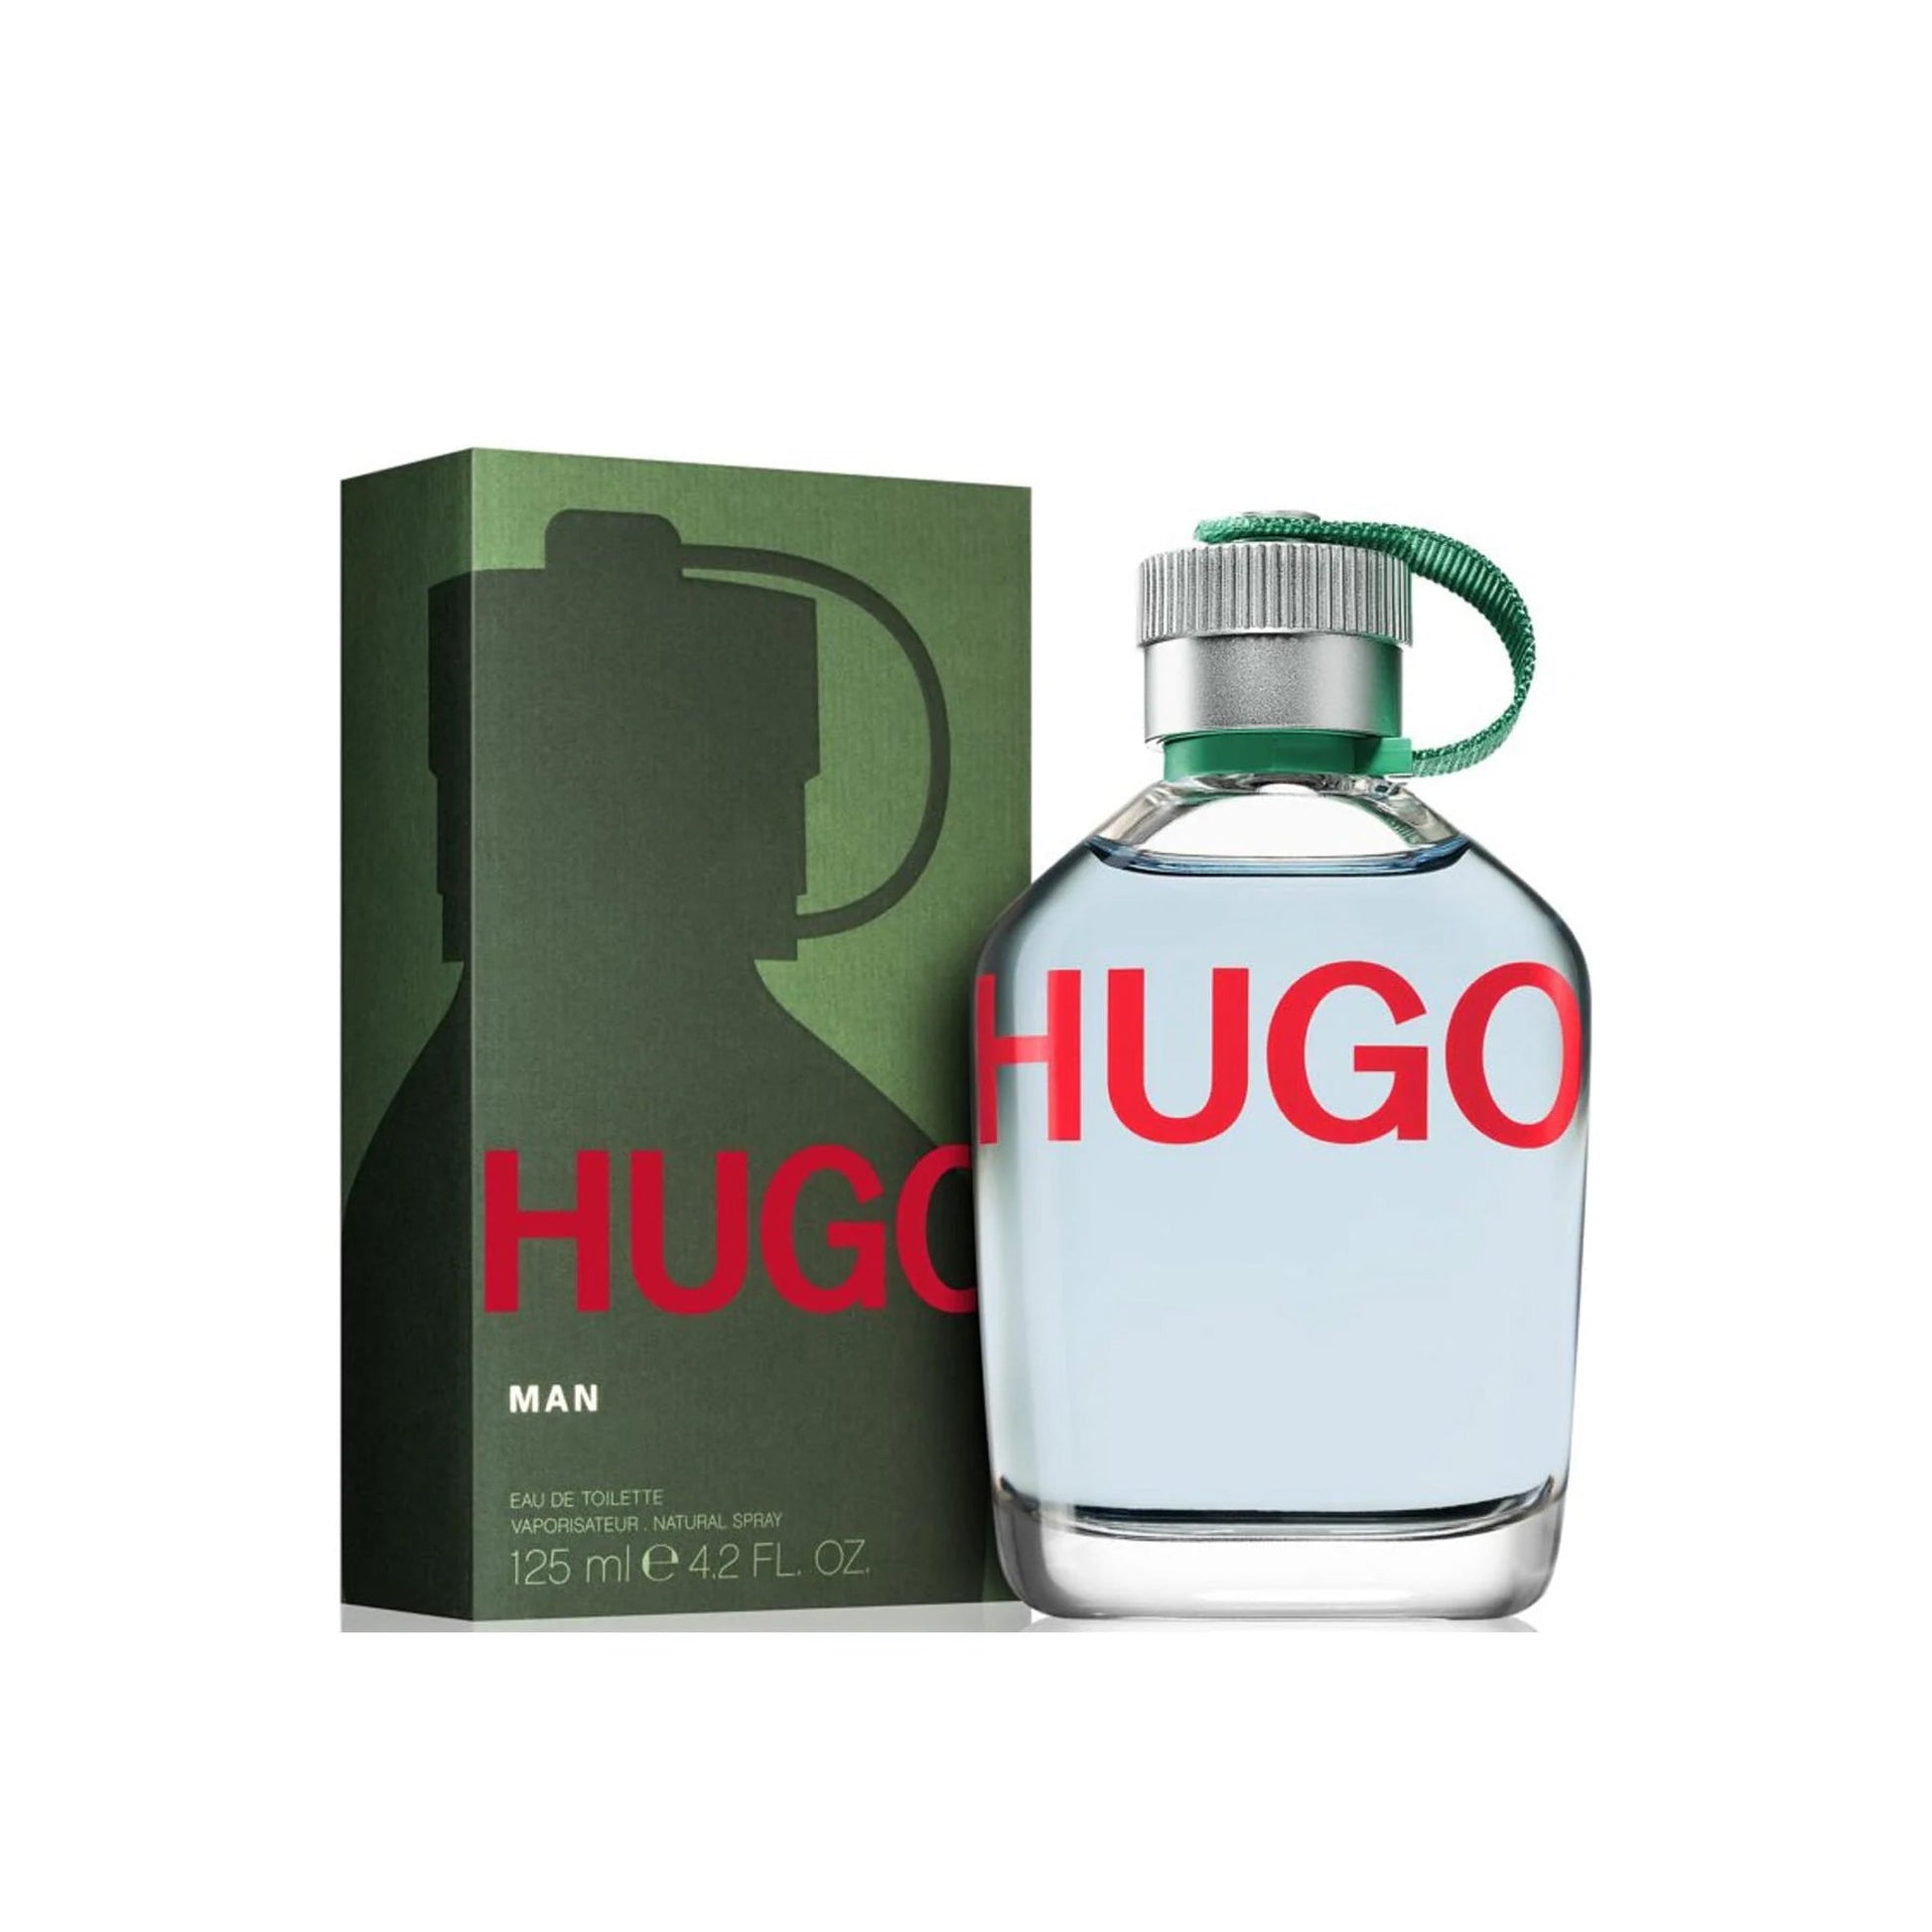 Hugo Man Green Eau de Toilette Spray for Men by Hugo Boss, Product image 1